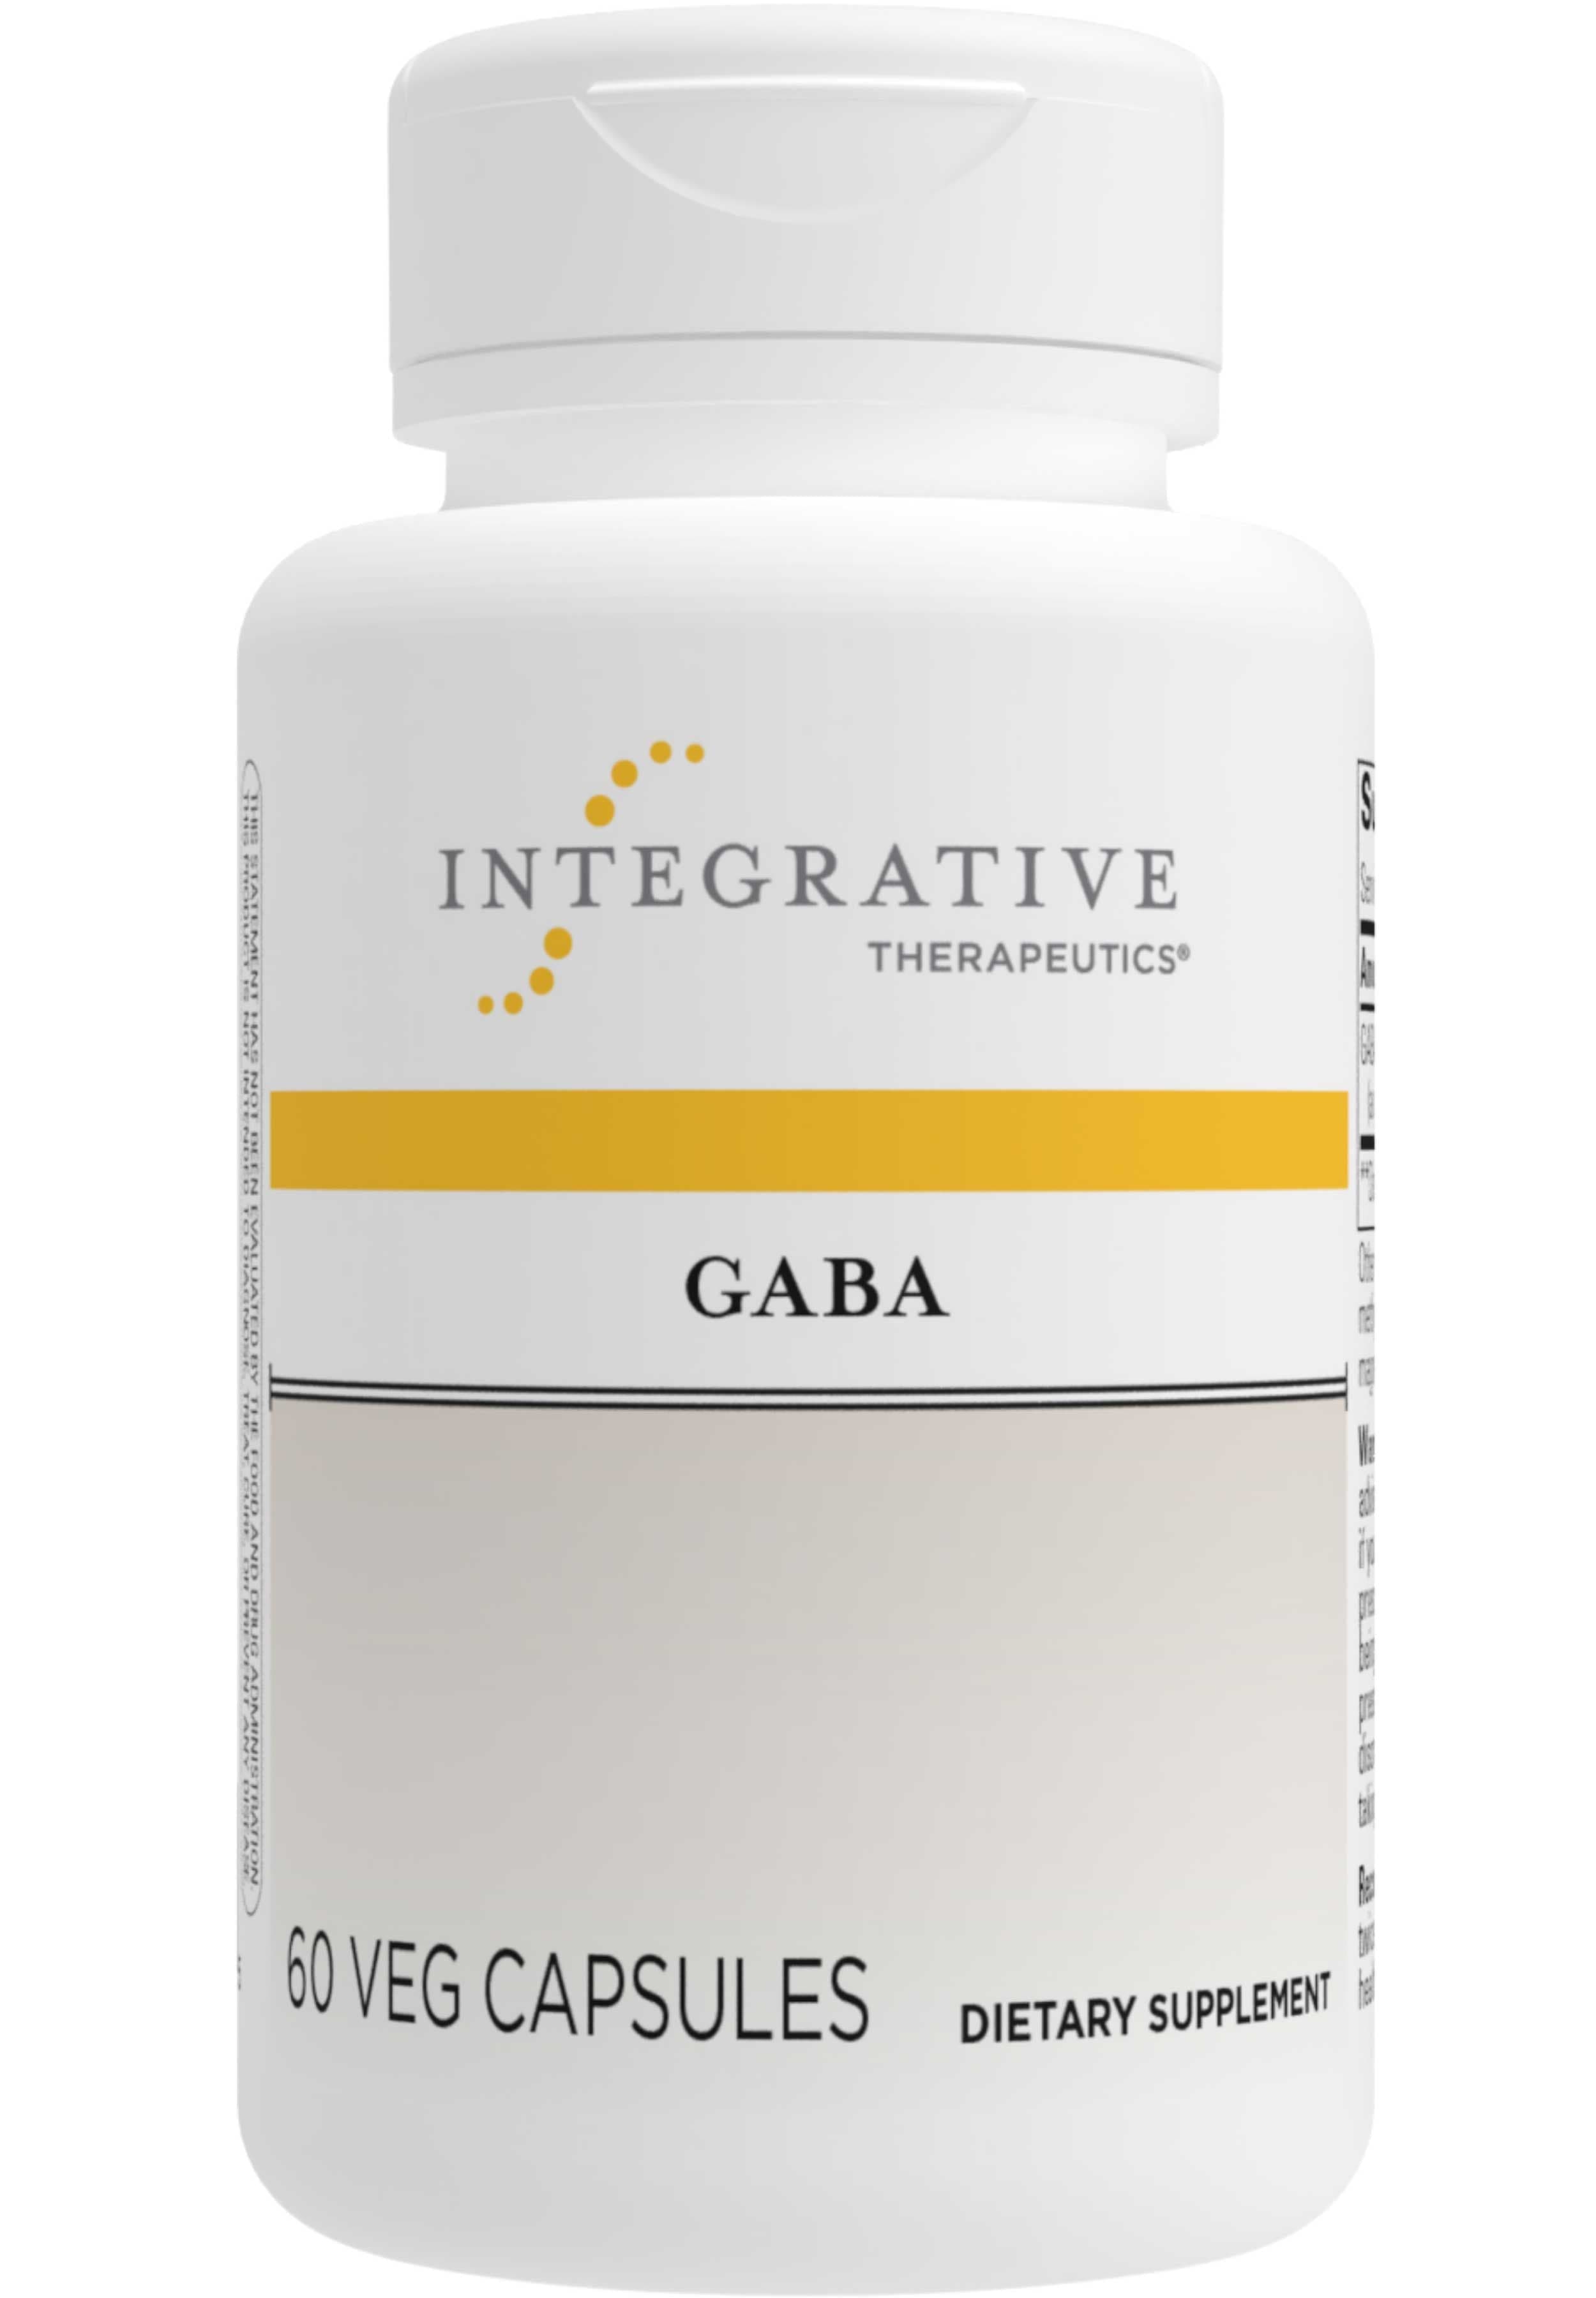 Integrative Therapeutics GABA